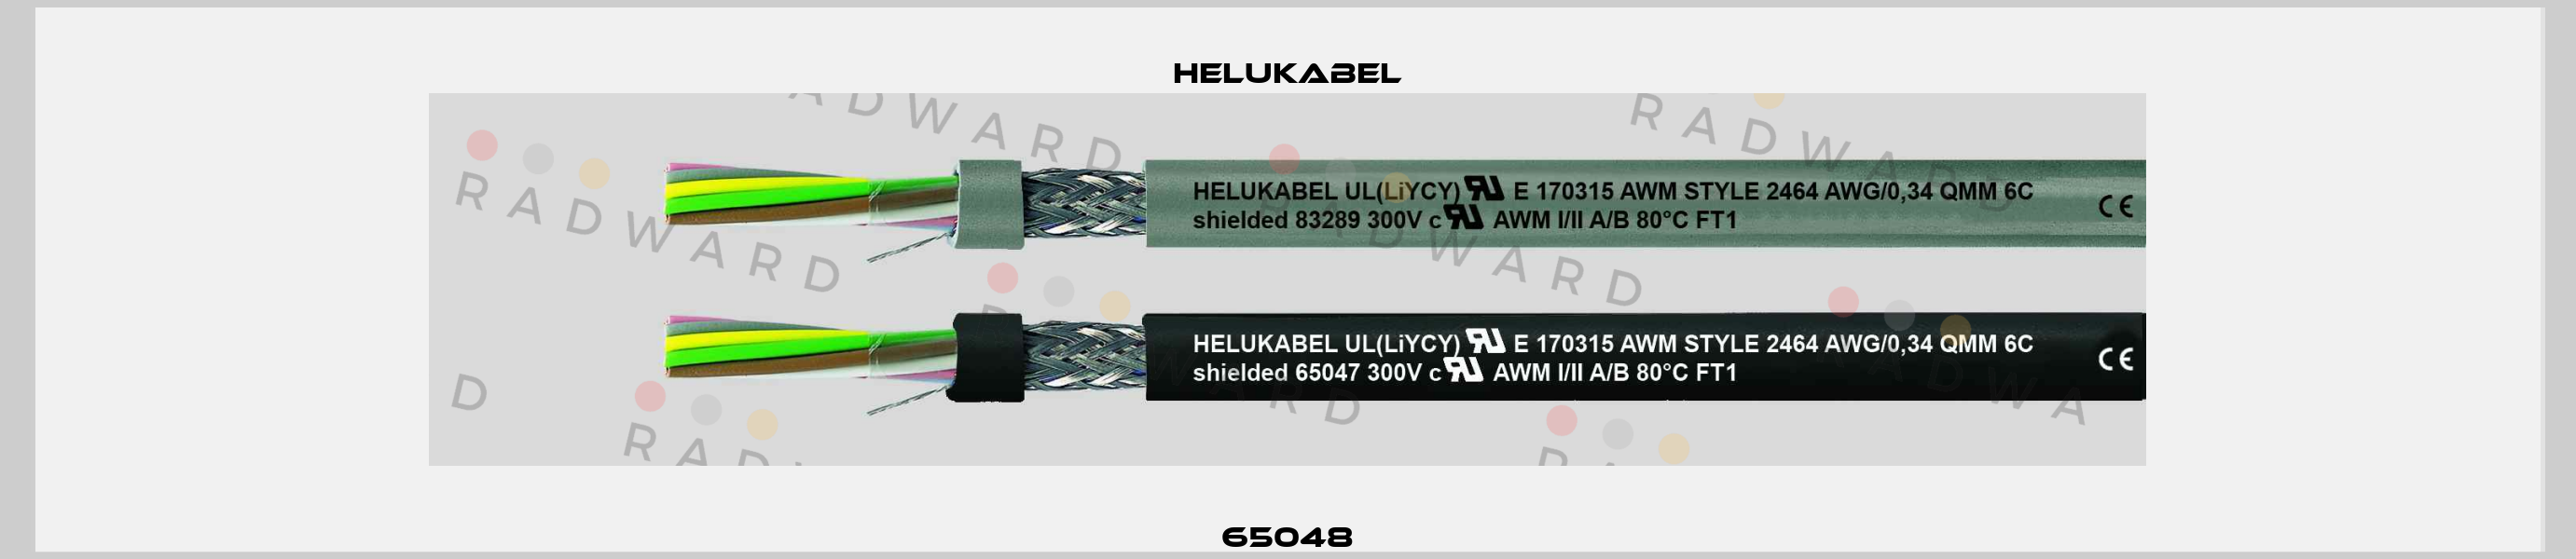 65048 Helukabel